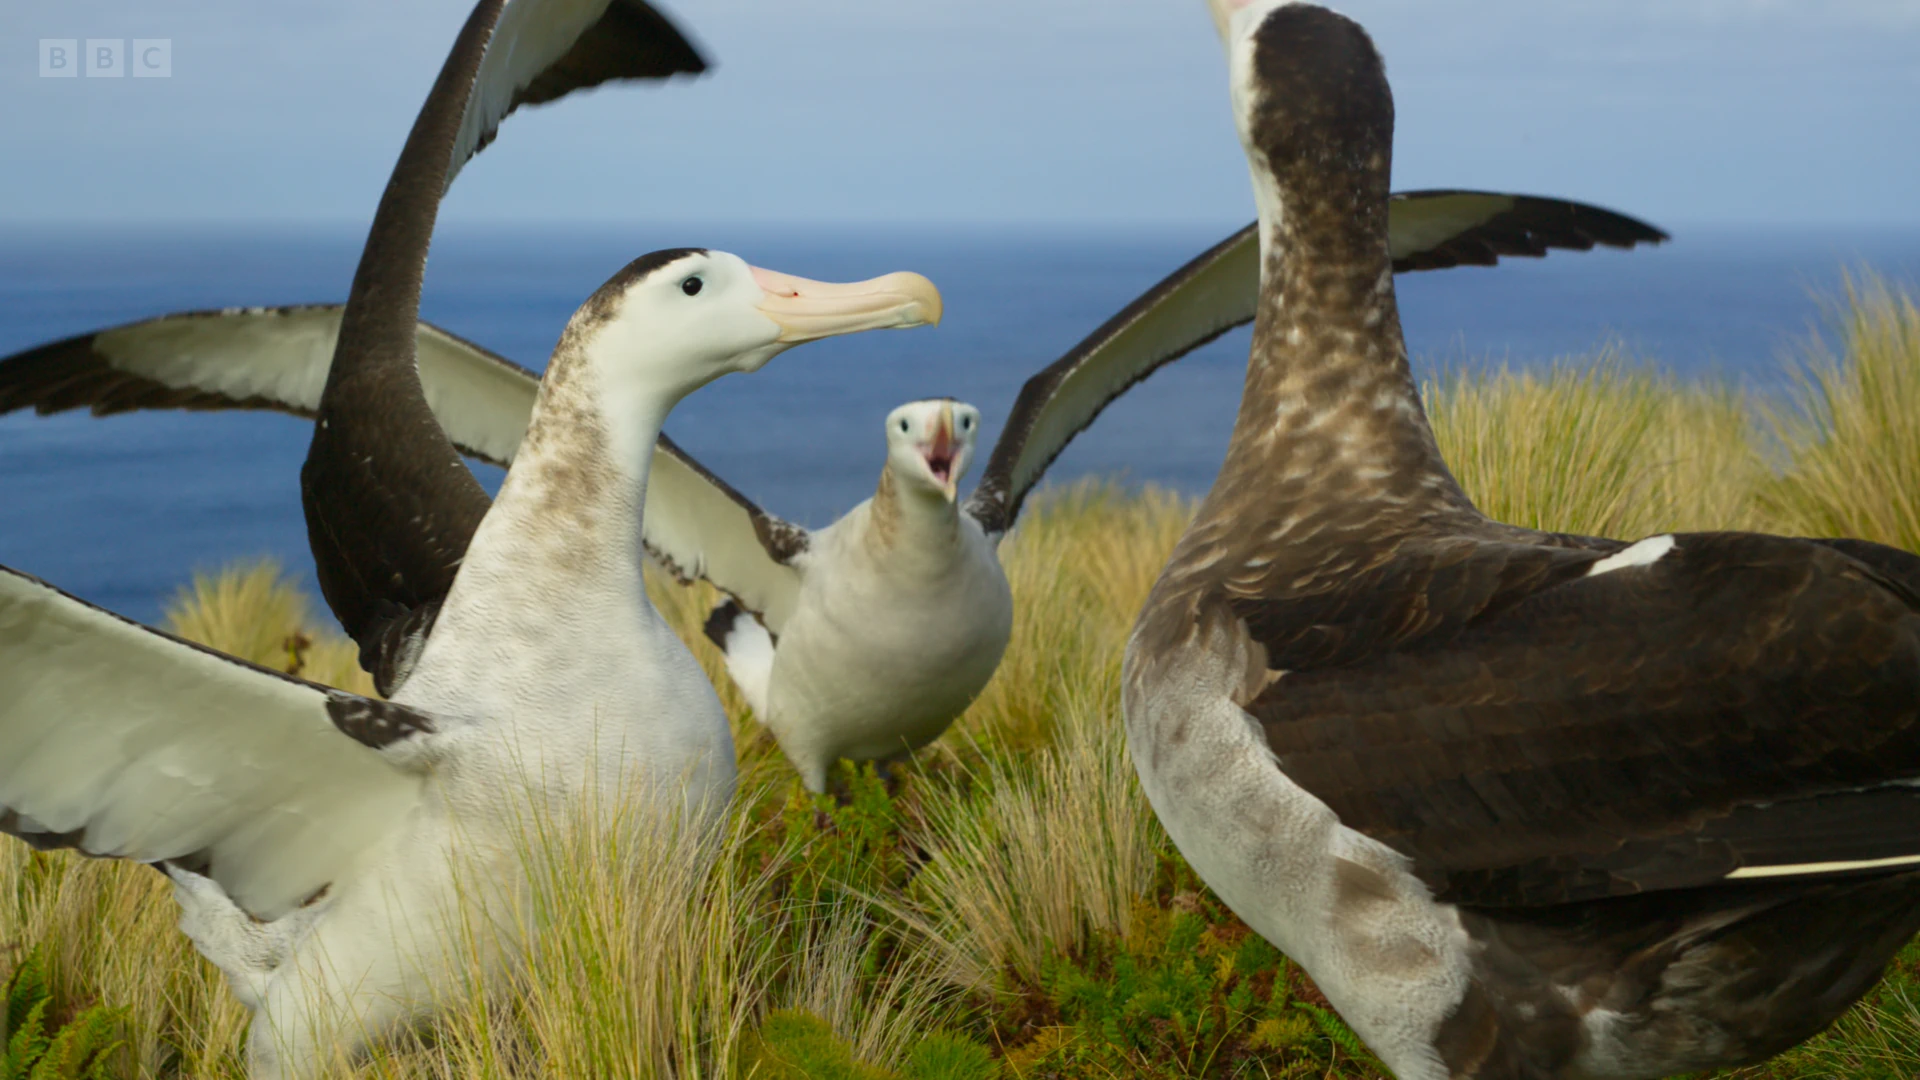 Antipodean albatross (Diomedea antipodensis) as shown in Frozen Planet II - Frozen South